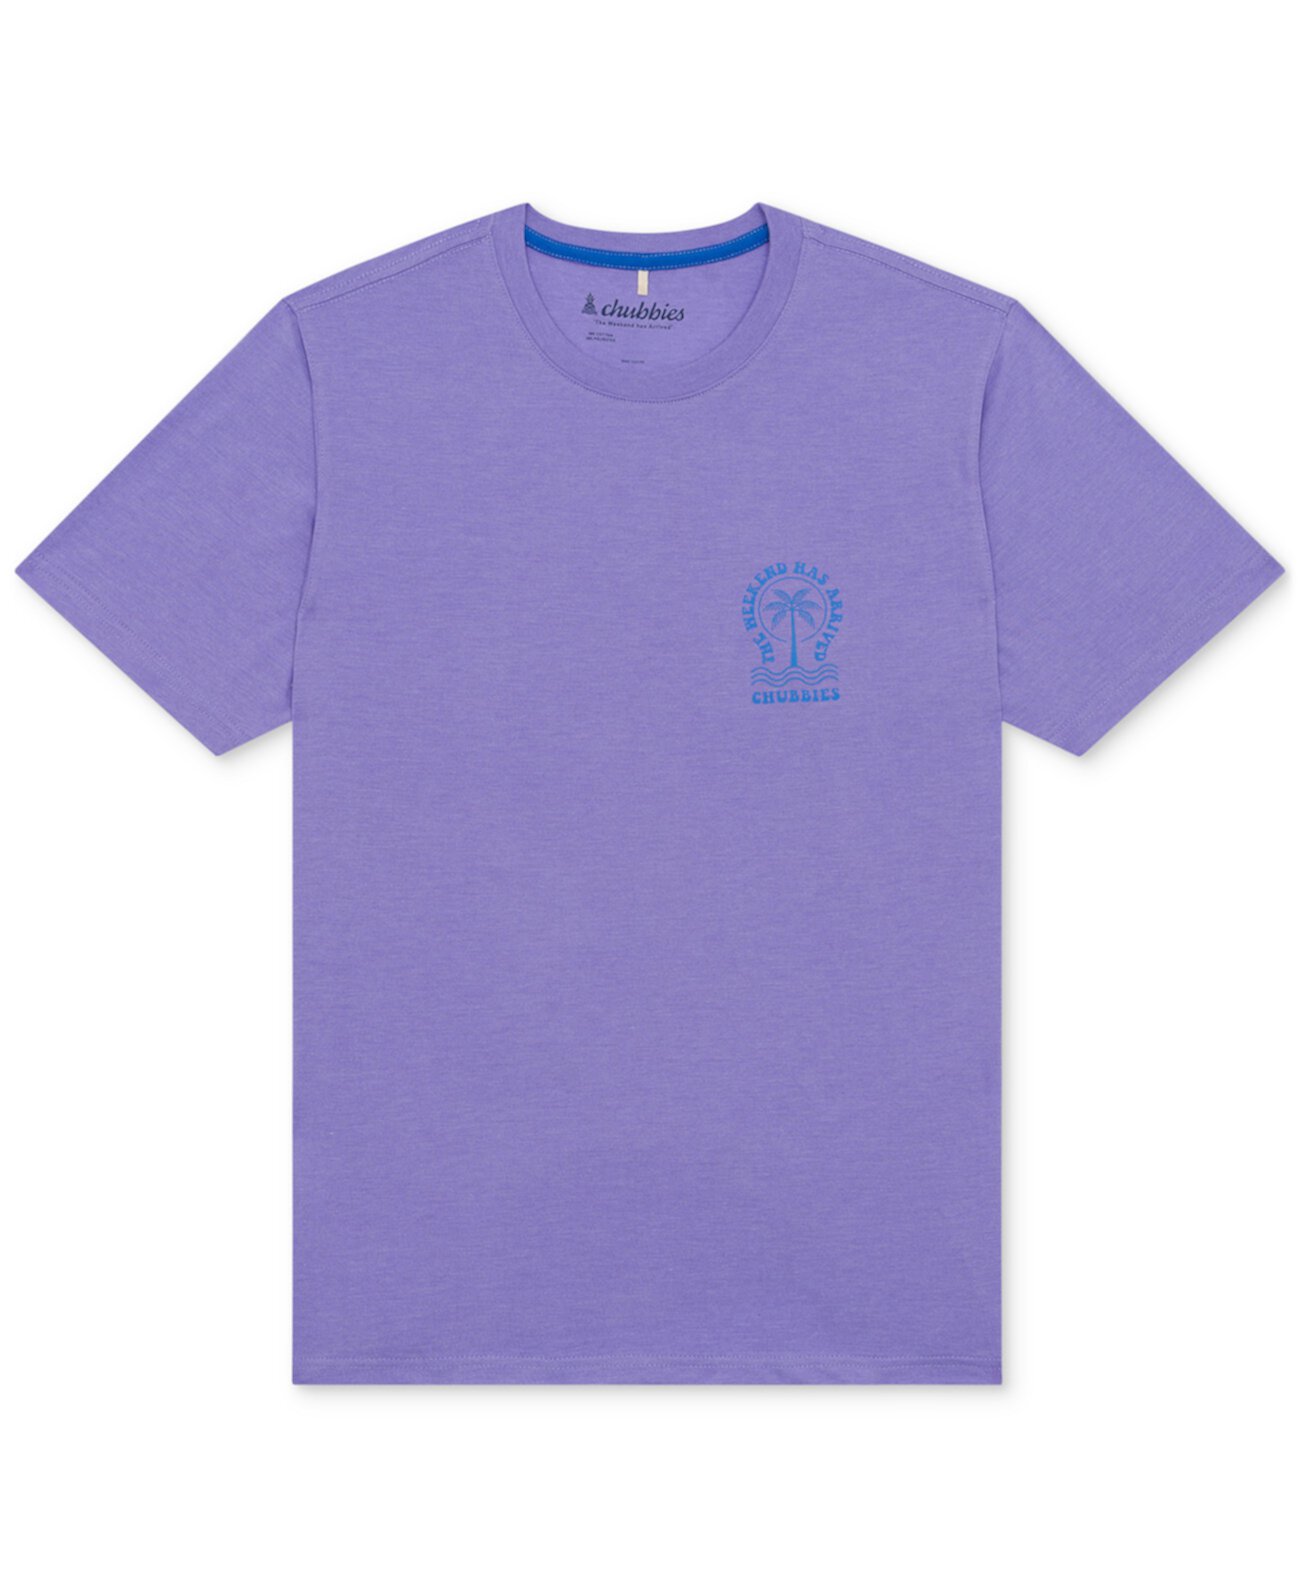 Мужская футболка свободного кроя с логотипом The Keep Calm и графическим рисунком CHUBBIES